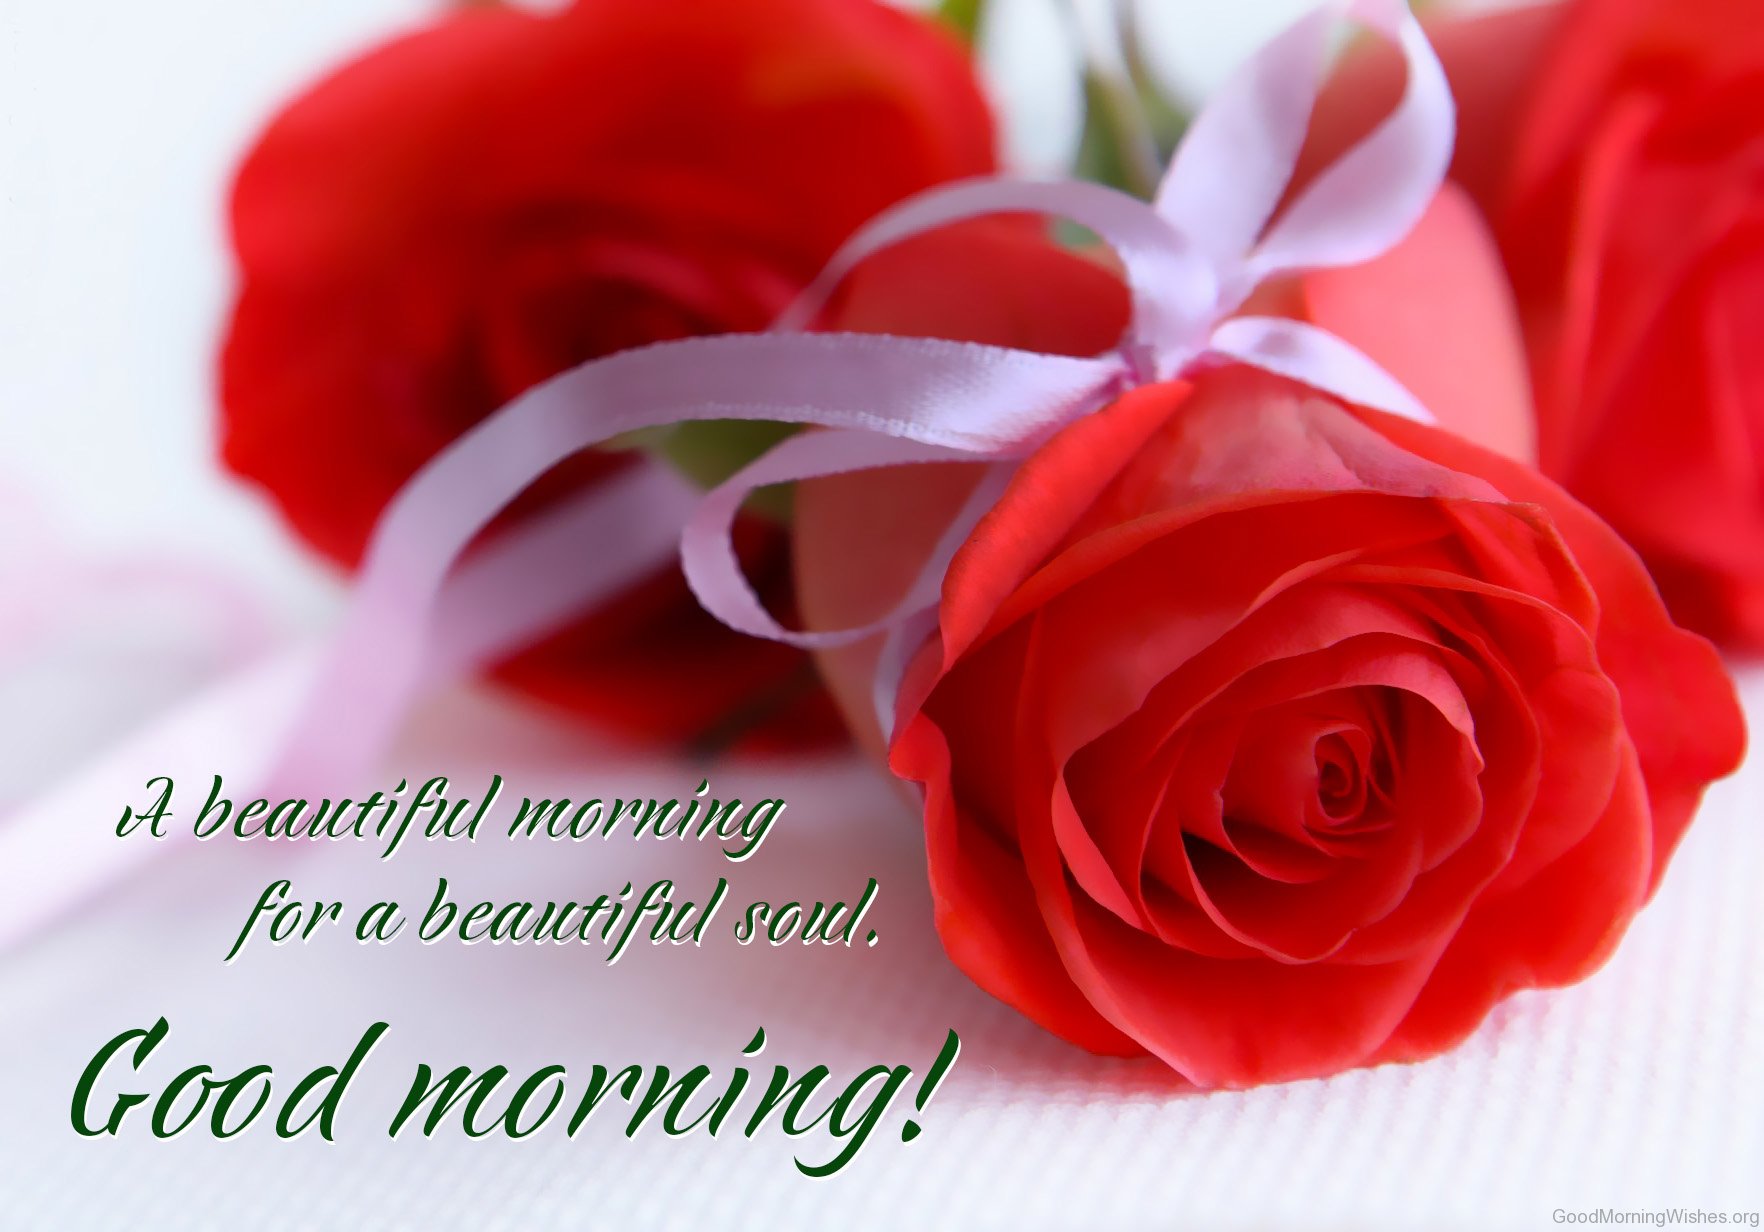 Good morning my love rose greetings3